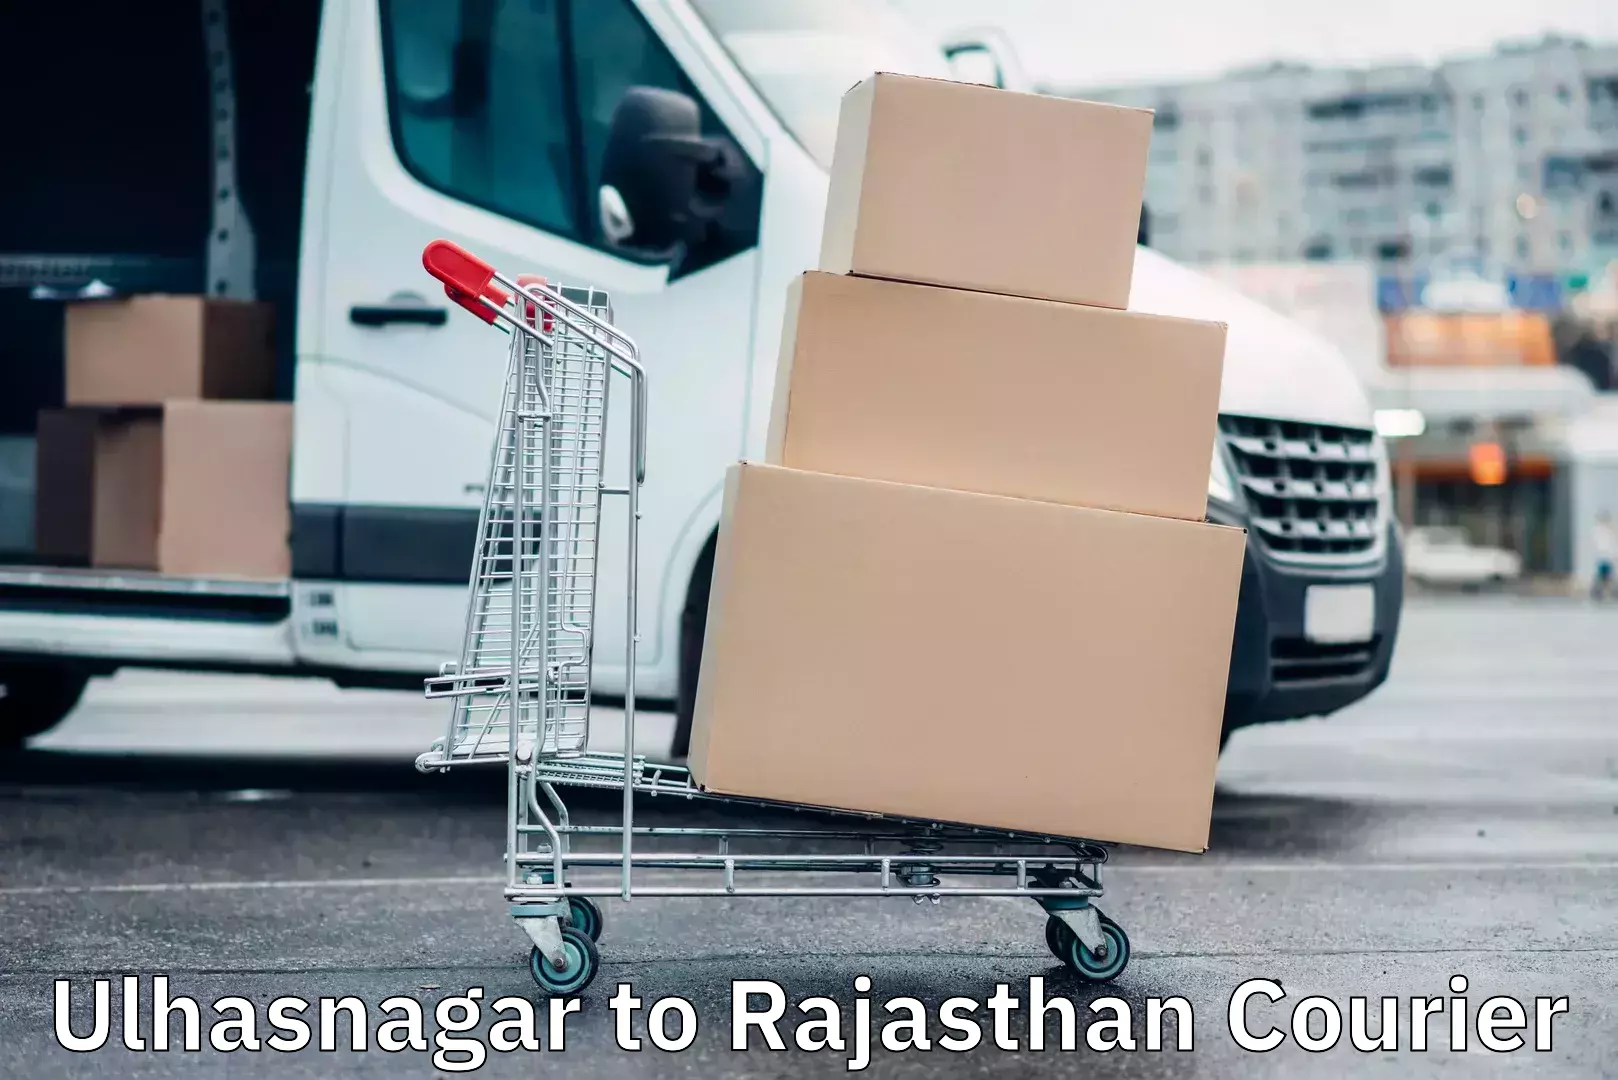 Efficient order fulfillment Ulhasnagar to Rajasthan